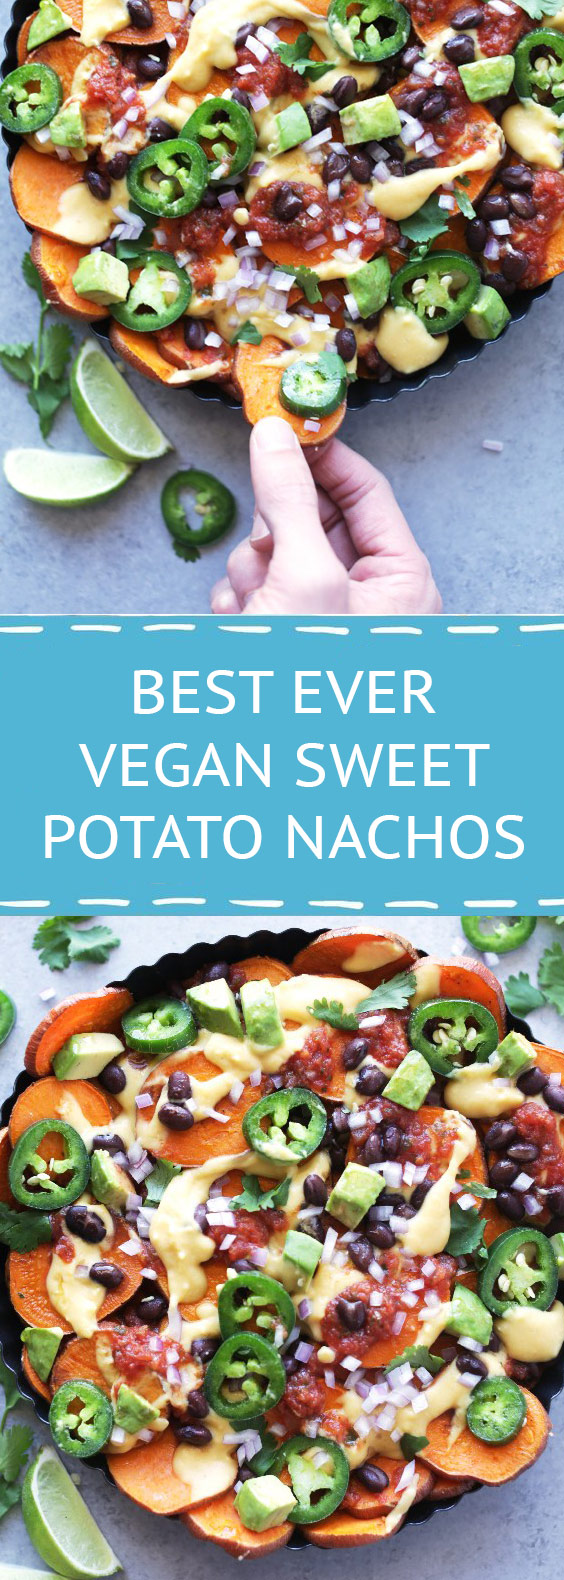 Best Ever Vegan Sweet Potato Nachos